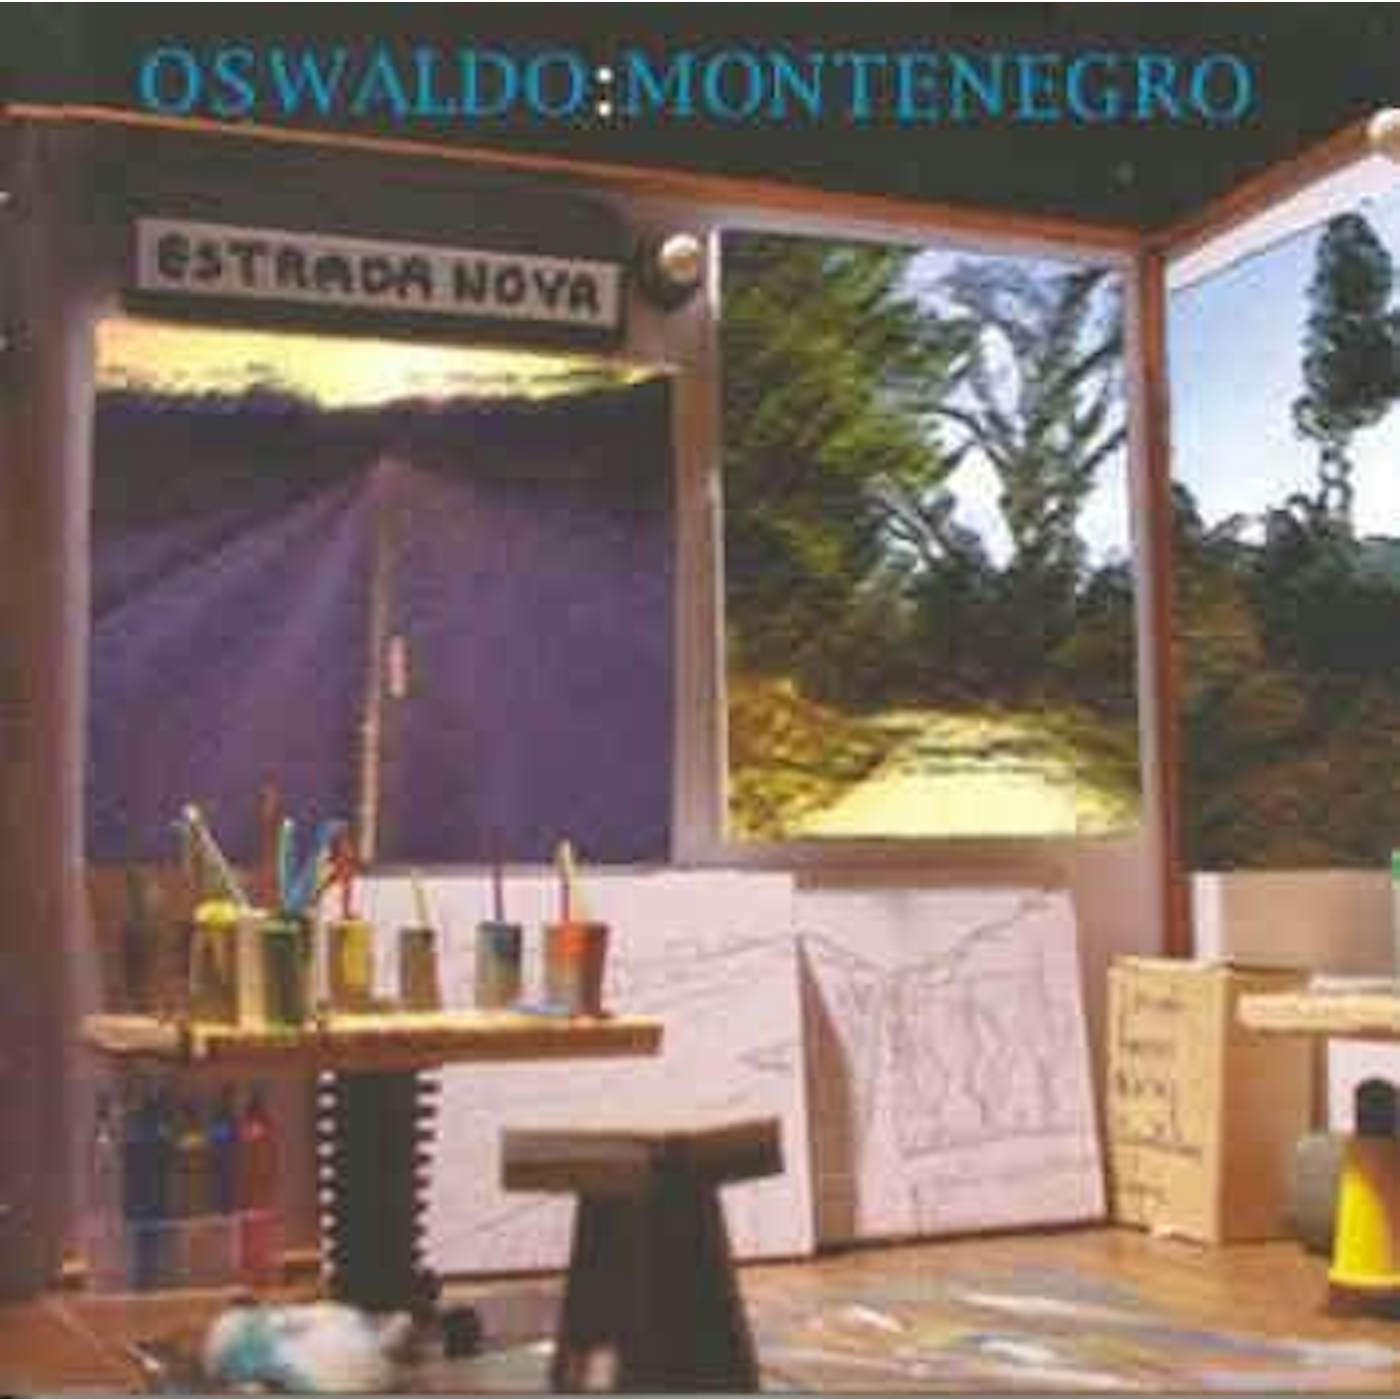 Oswaldo Montenegro ESTRADA NOVA CD